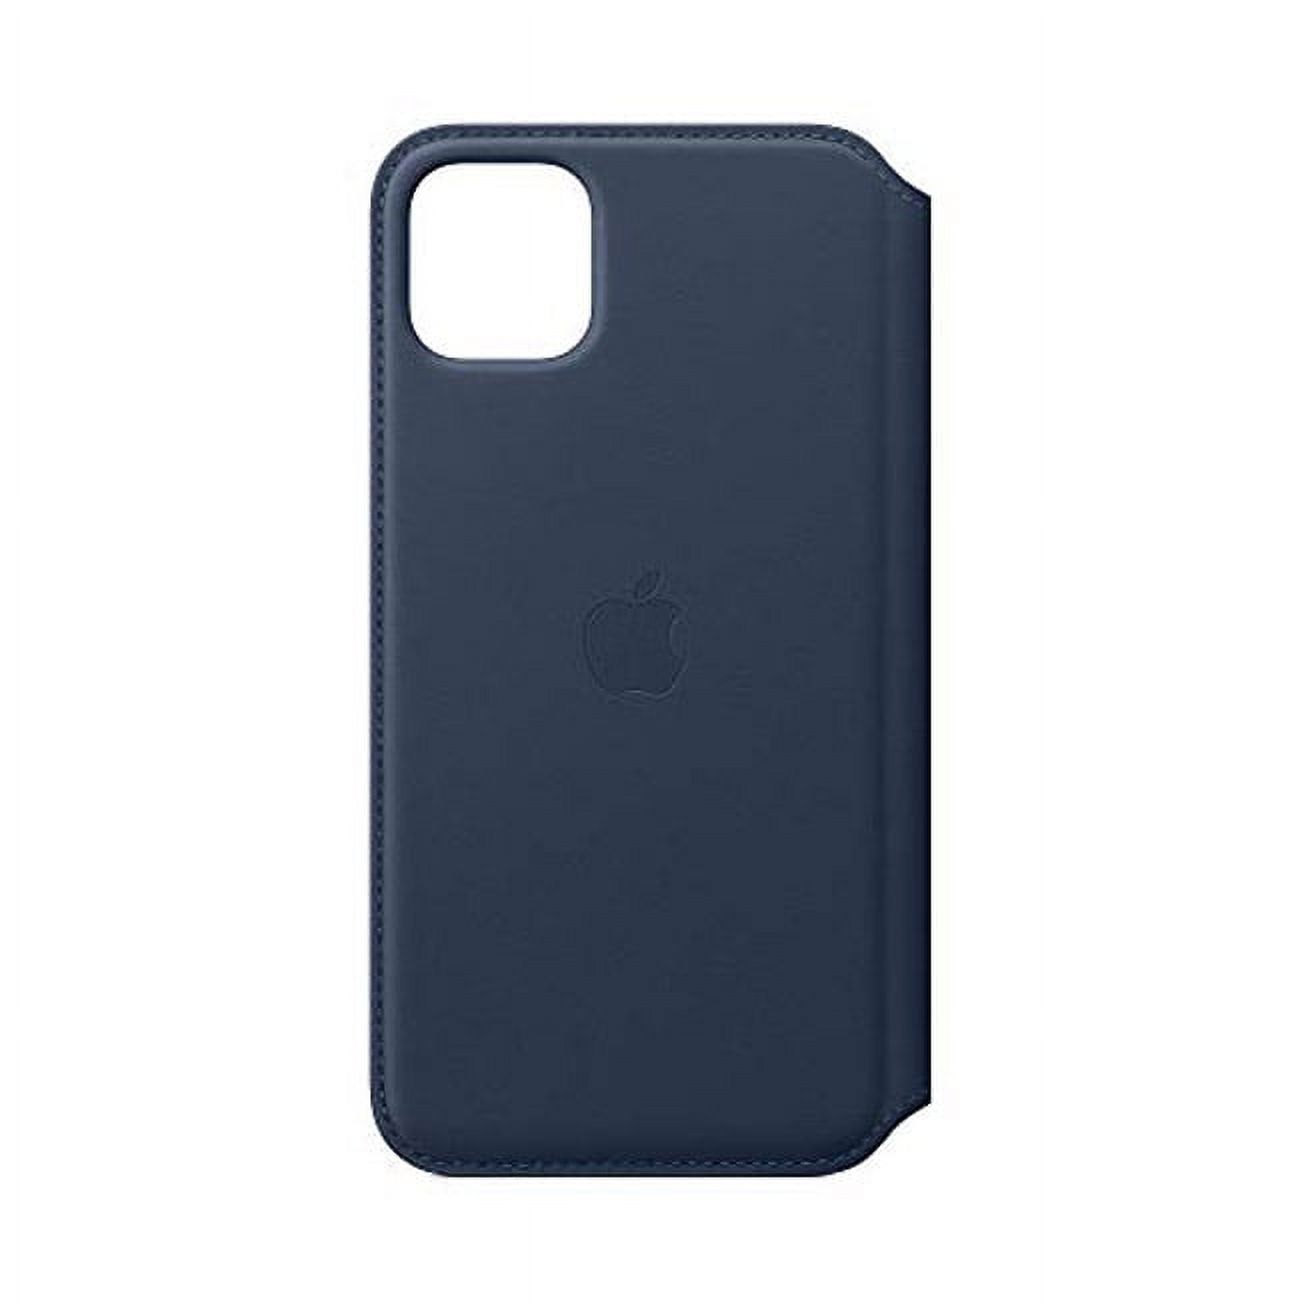 Apple Carrying Case (Folio) Apple iPhone 11 Pro Max Smartphone, Deep Sea Blue - image 1 of 4